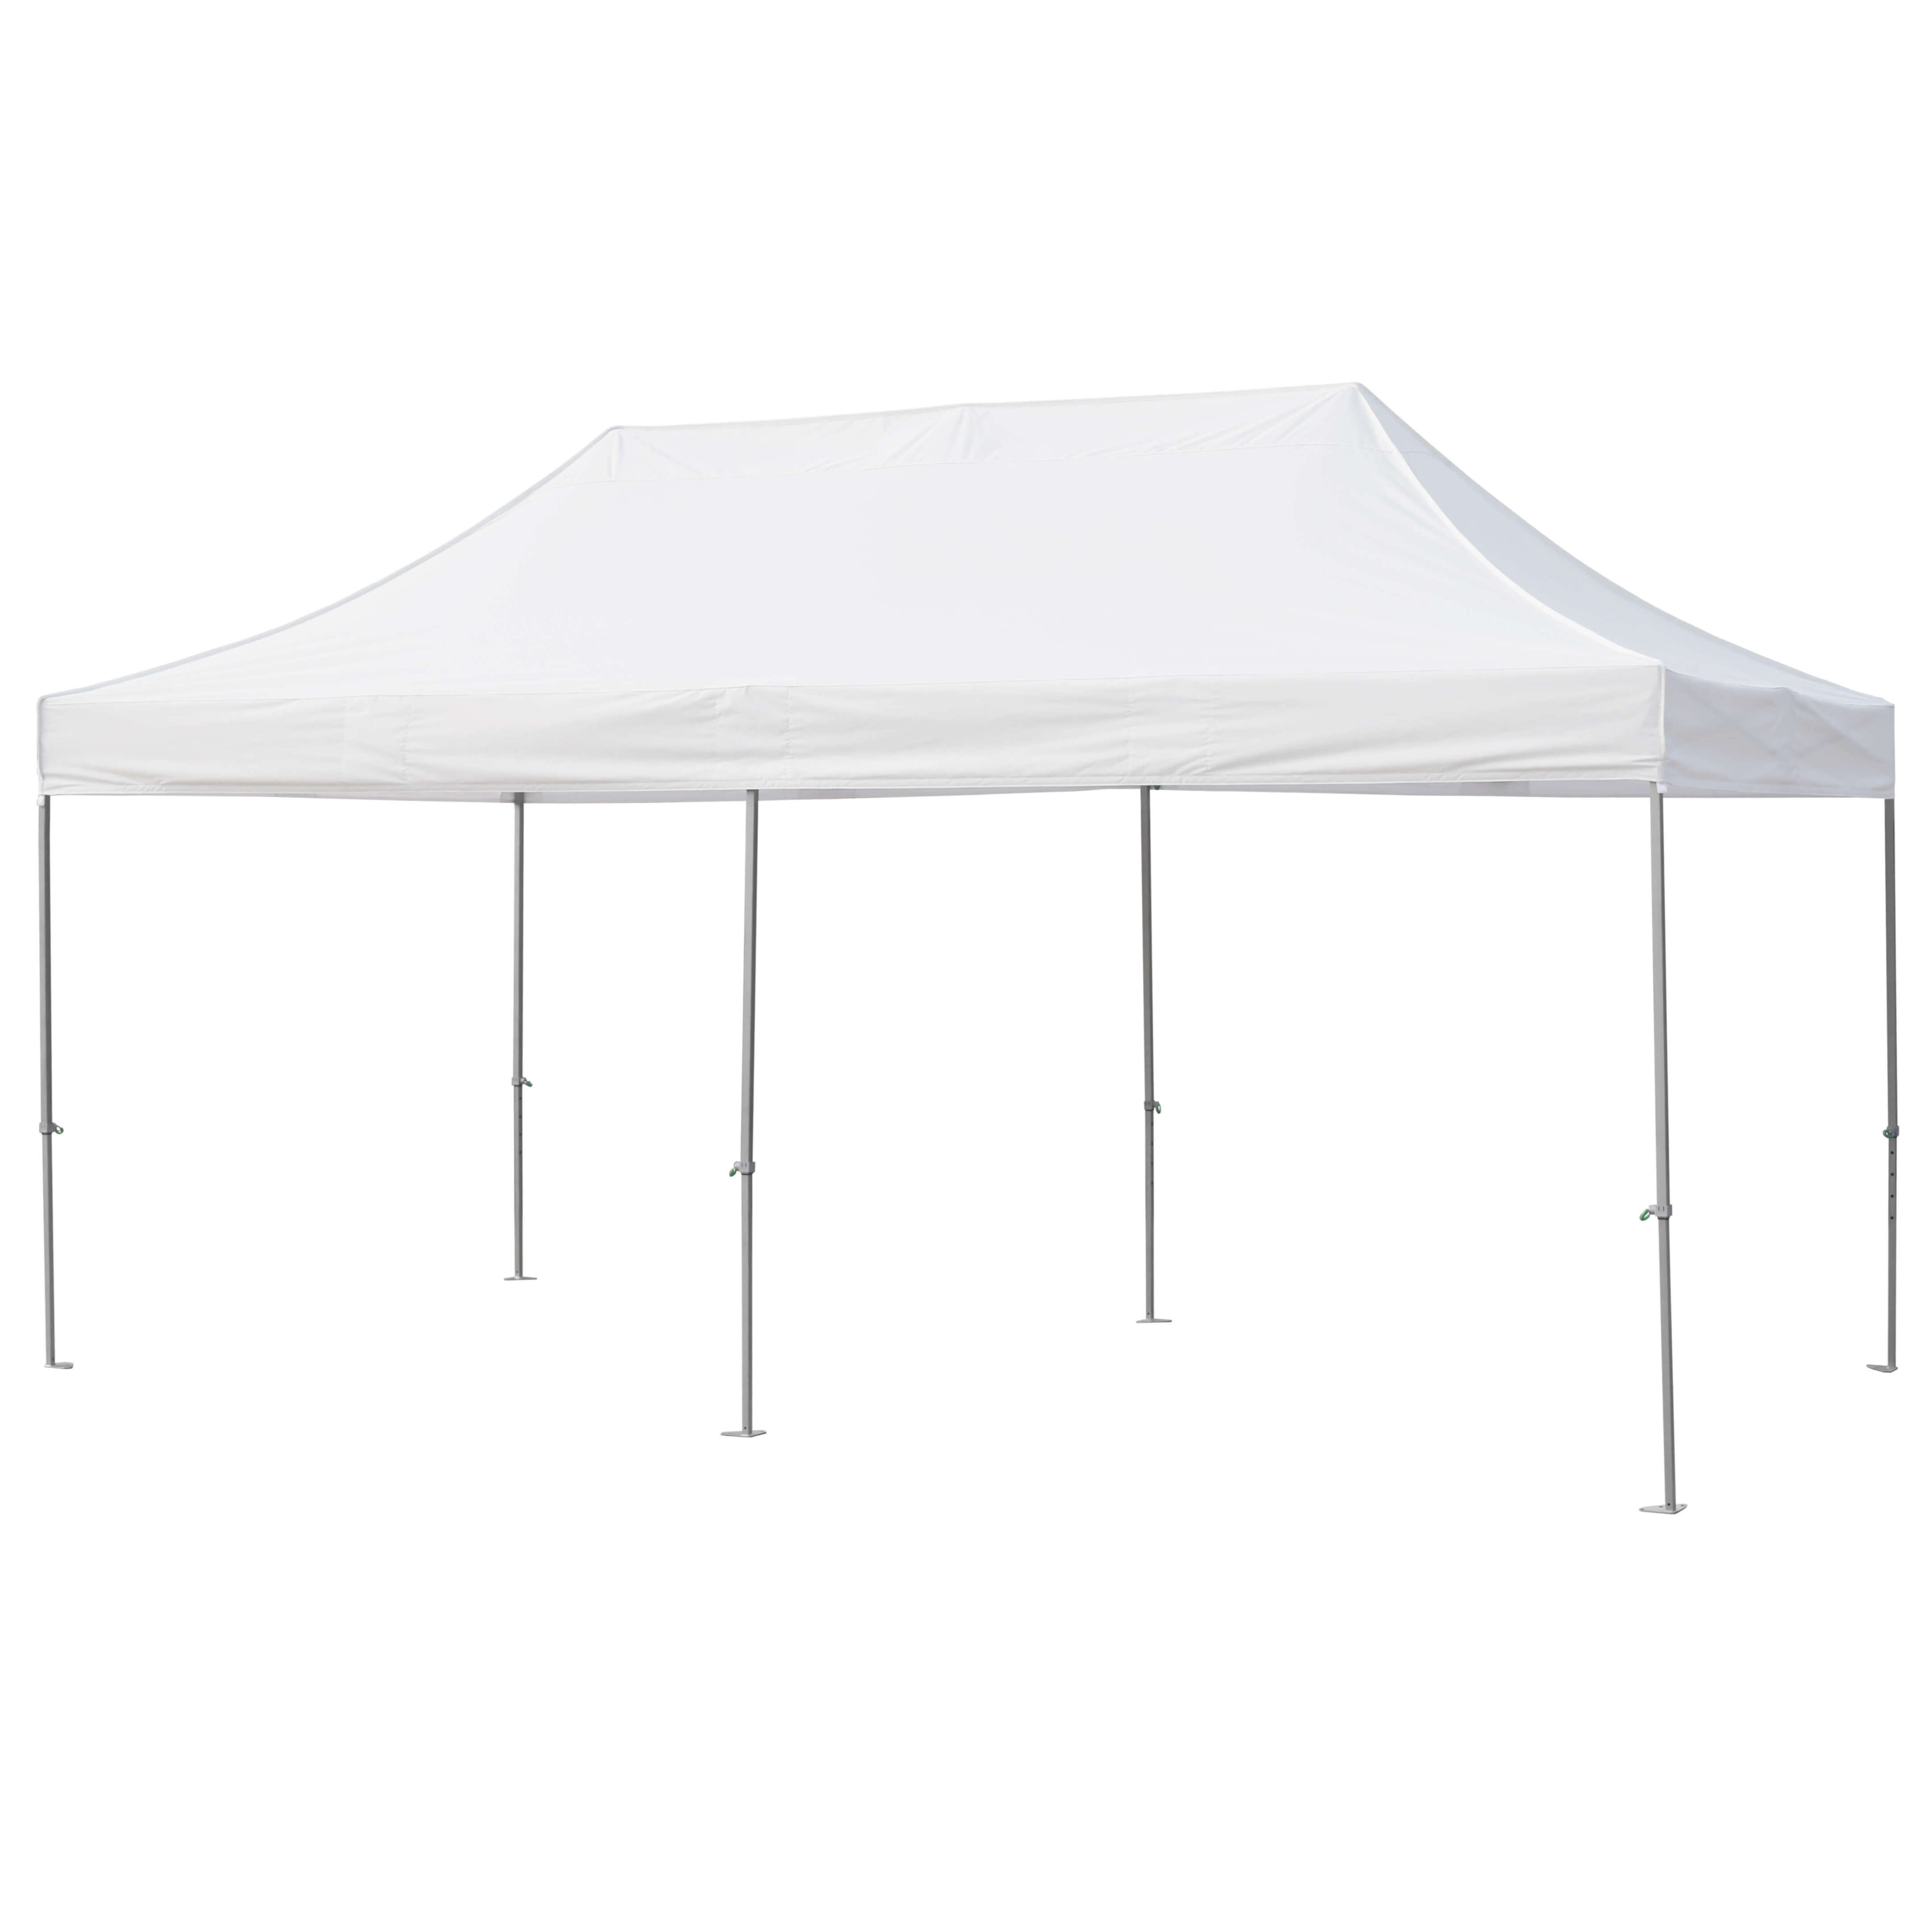 Tente Reception Acier 3x6m BLANC - Gamme Strong - Tente Pliante de  Reception - Tente pliante PRO Acier